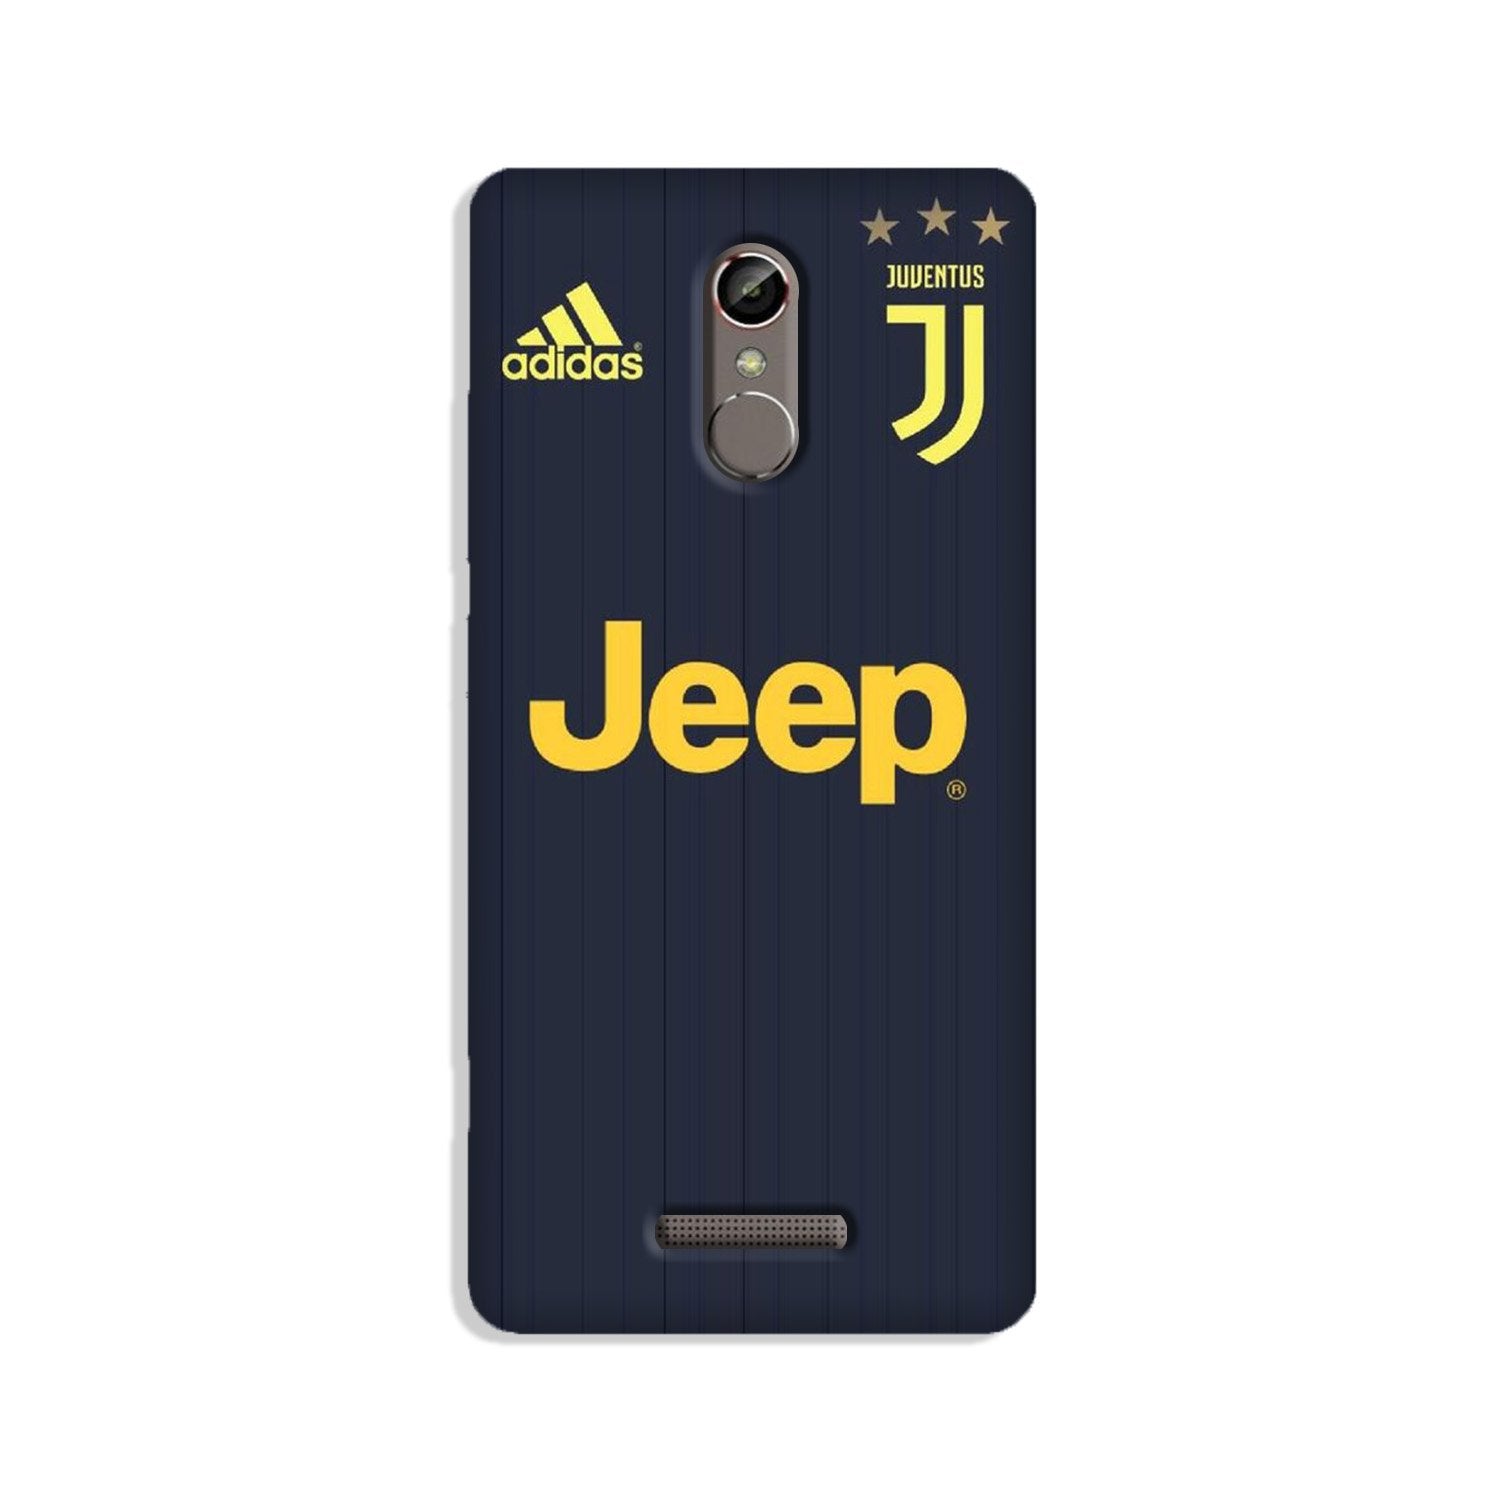 Jeep Juventus Case for Redmi Note 3(Design - 161)